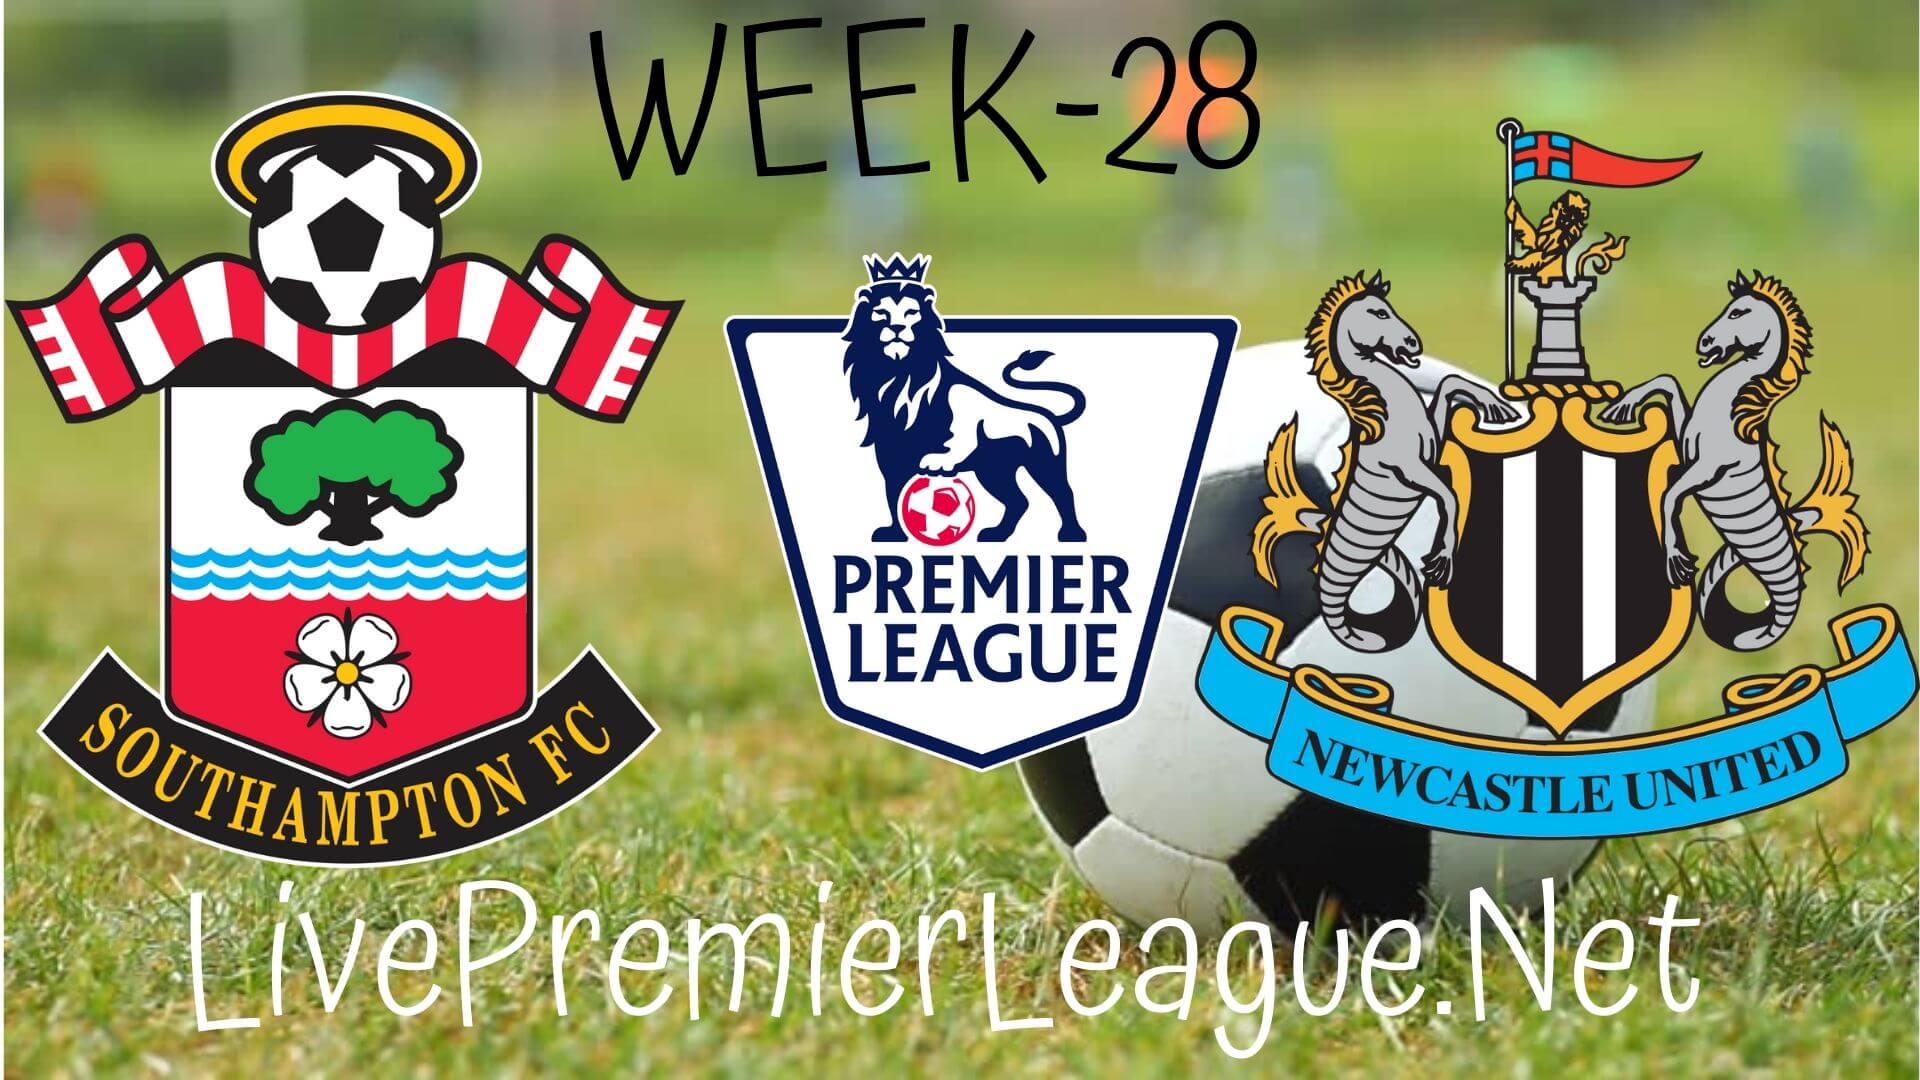 Southampton Vs Newcastle United Live Stream | EPL Week 29